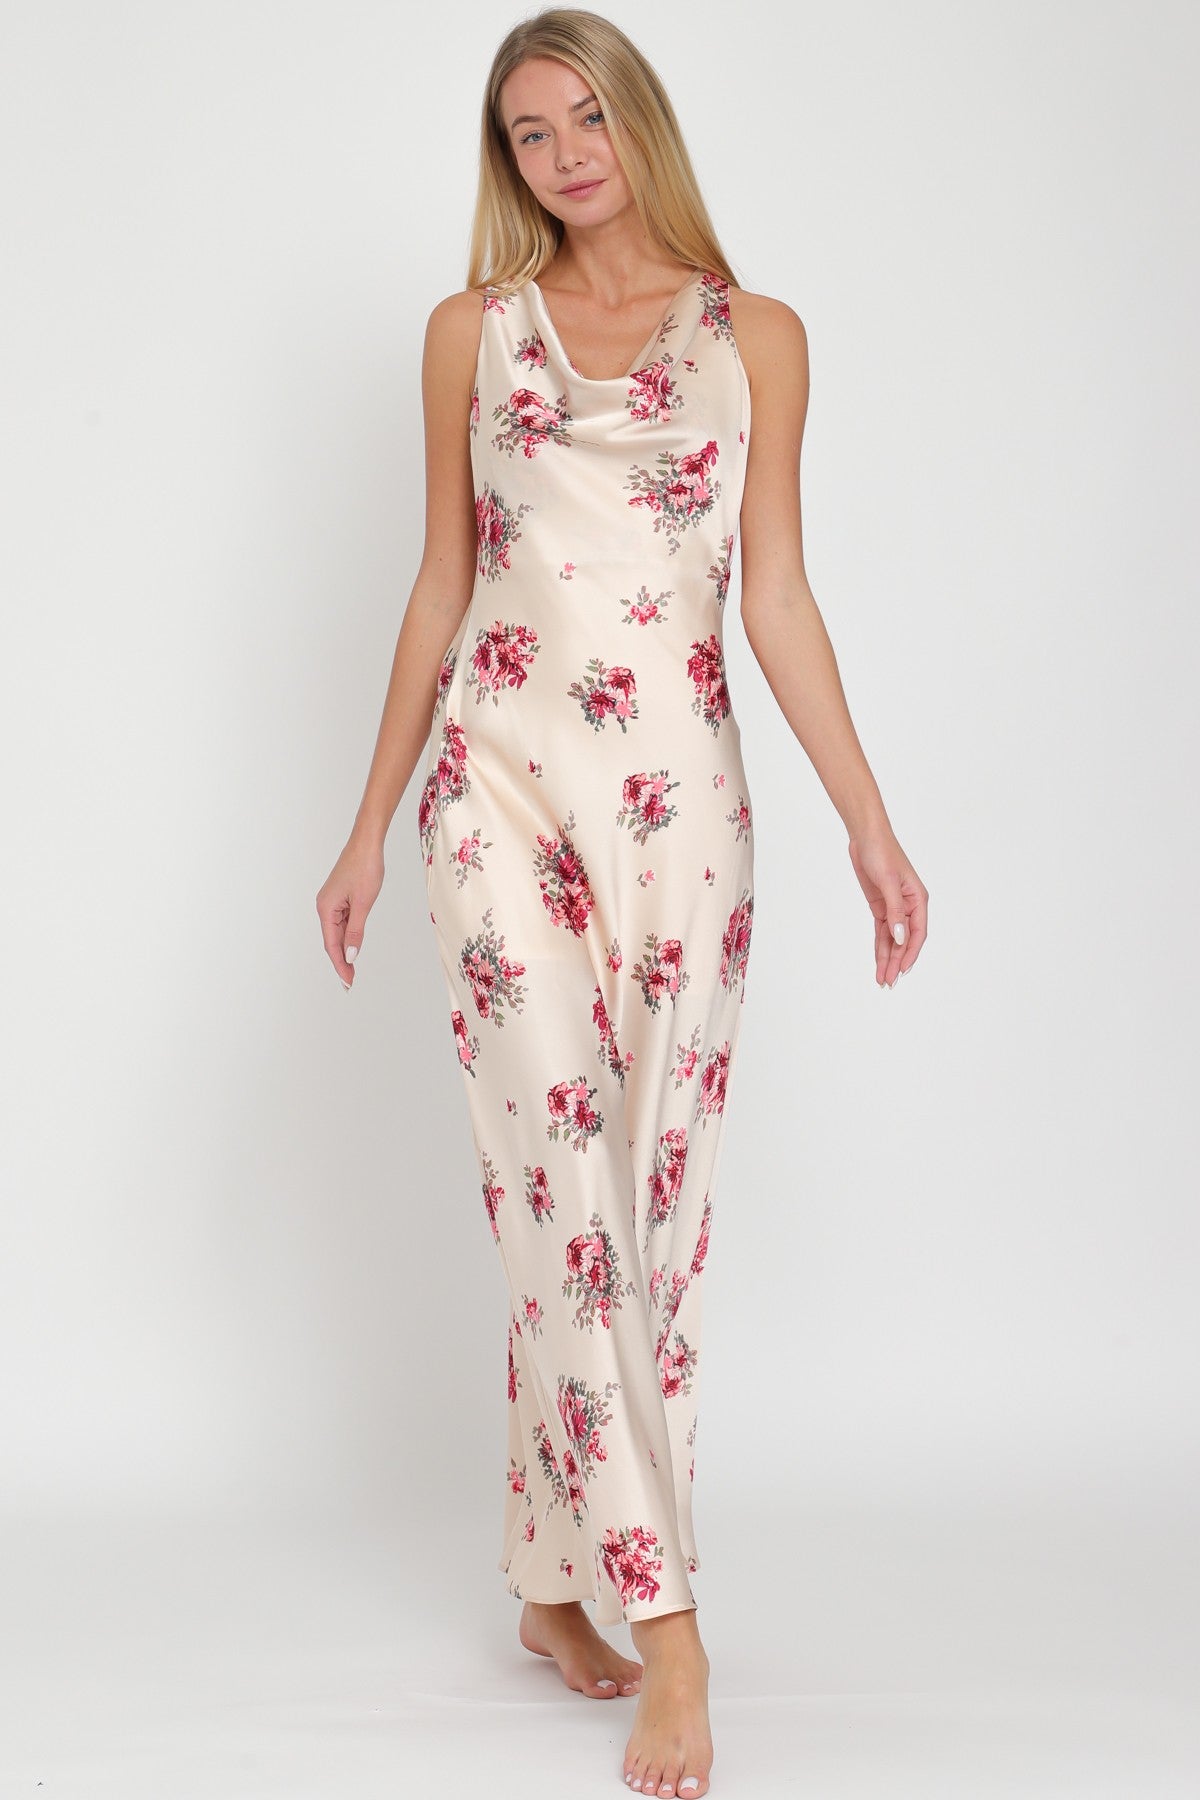 Brook Floral Maxi Dress